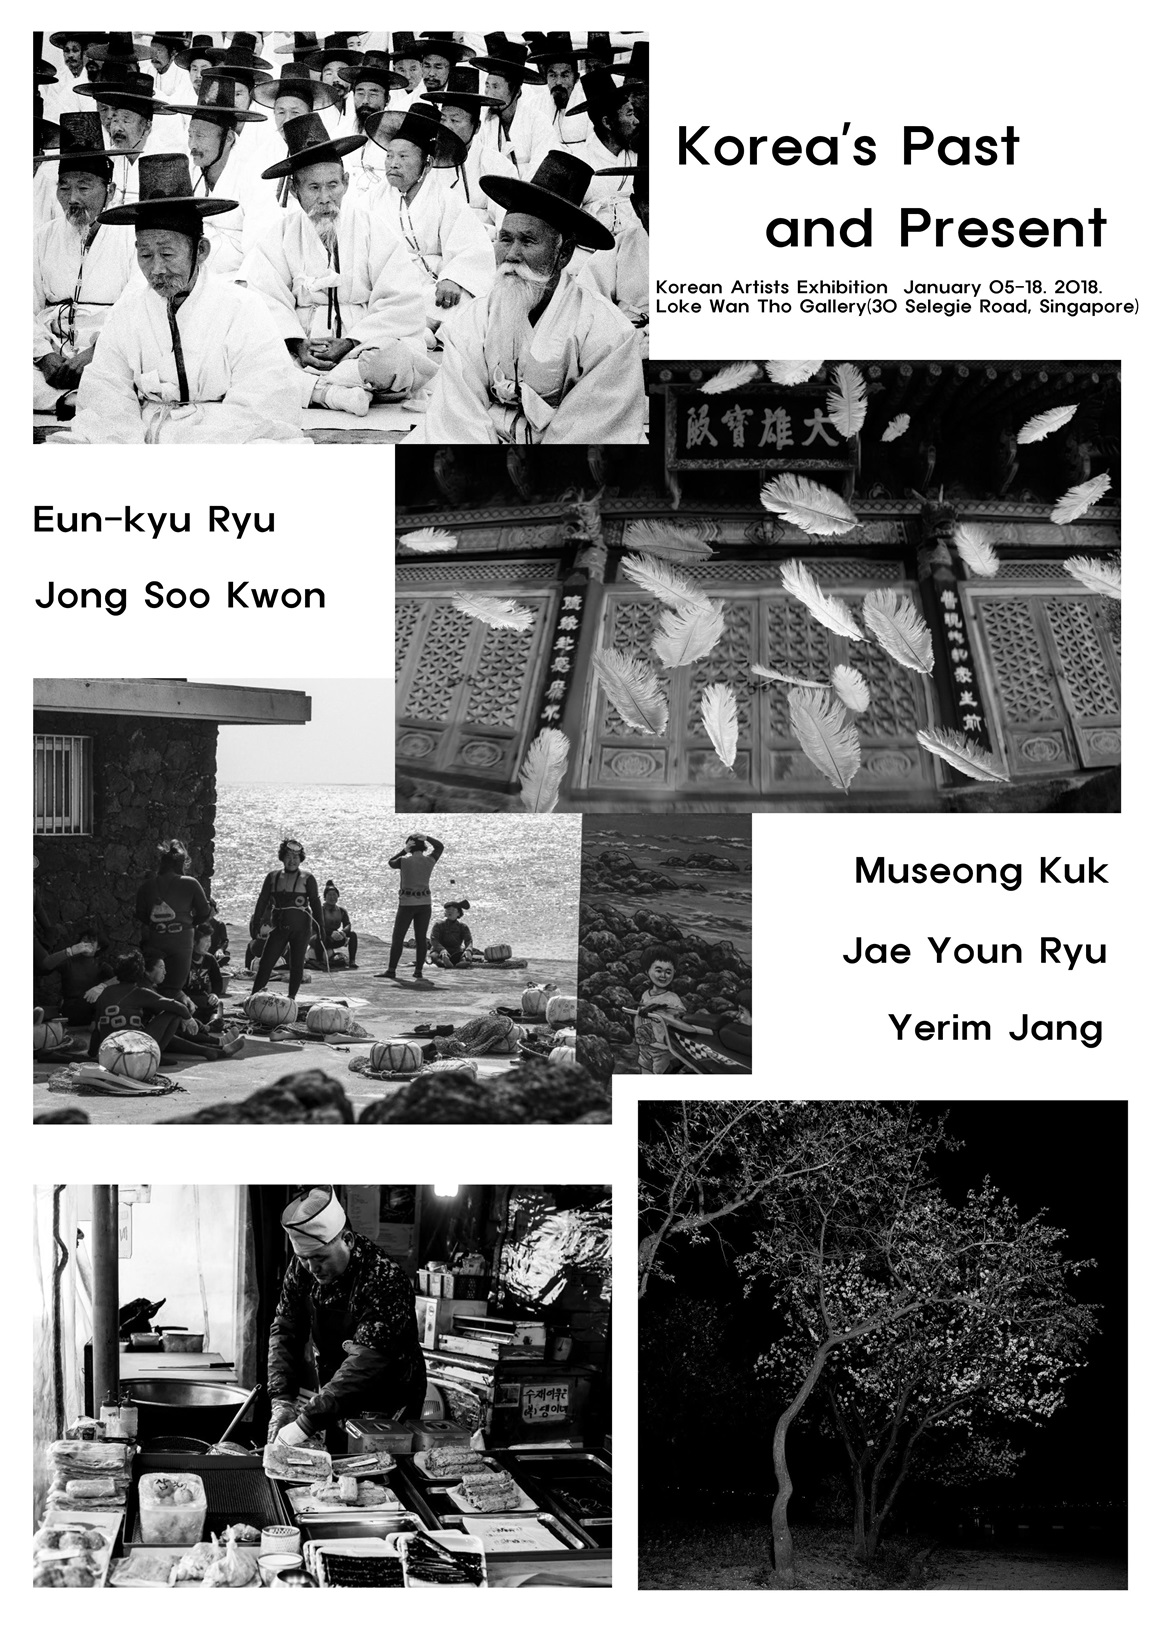 Korea's Past and Present